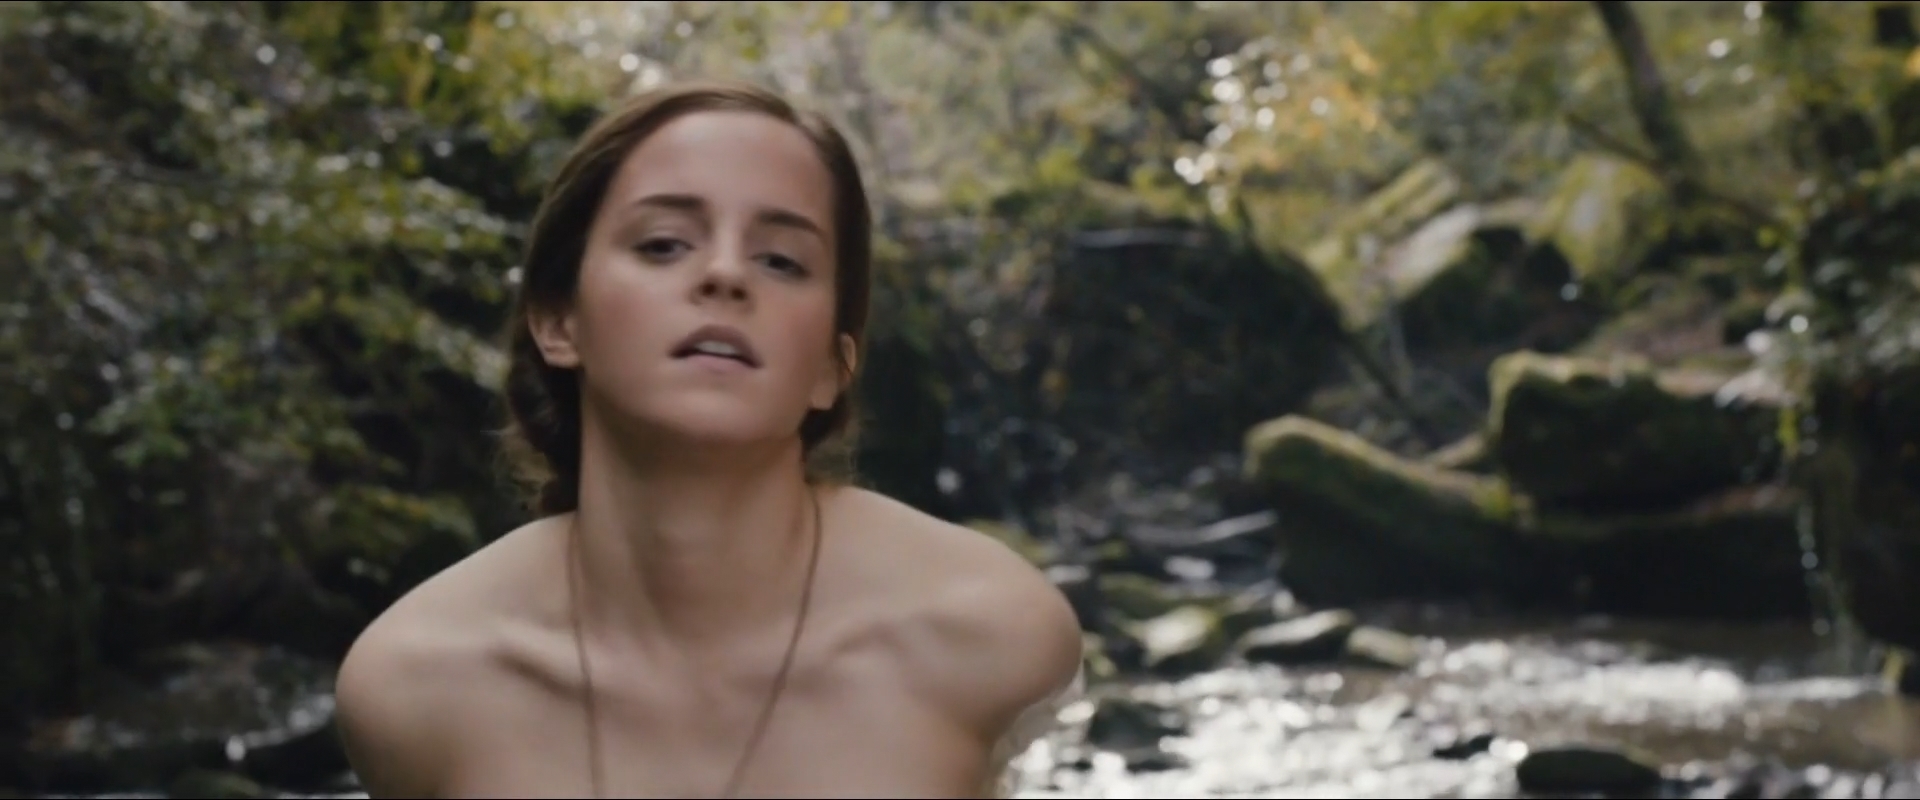 Emma Watson Nude In Colonia